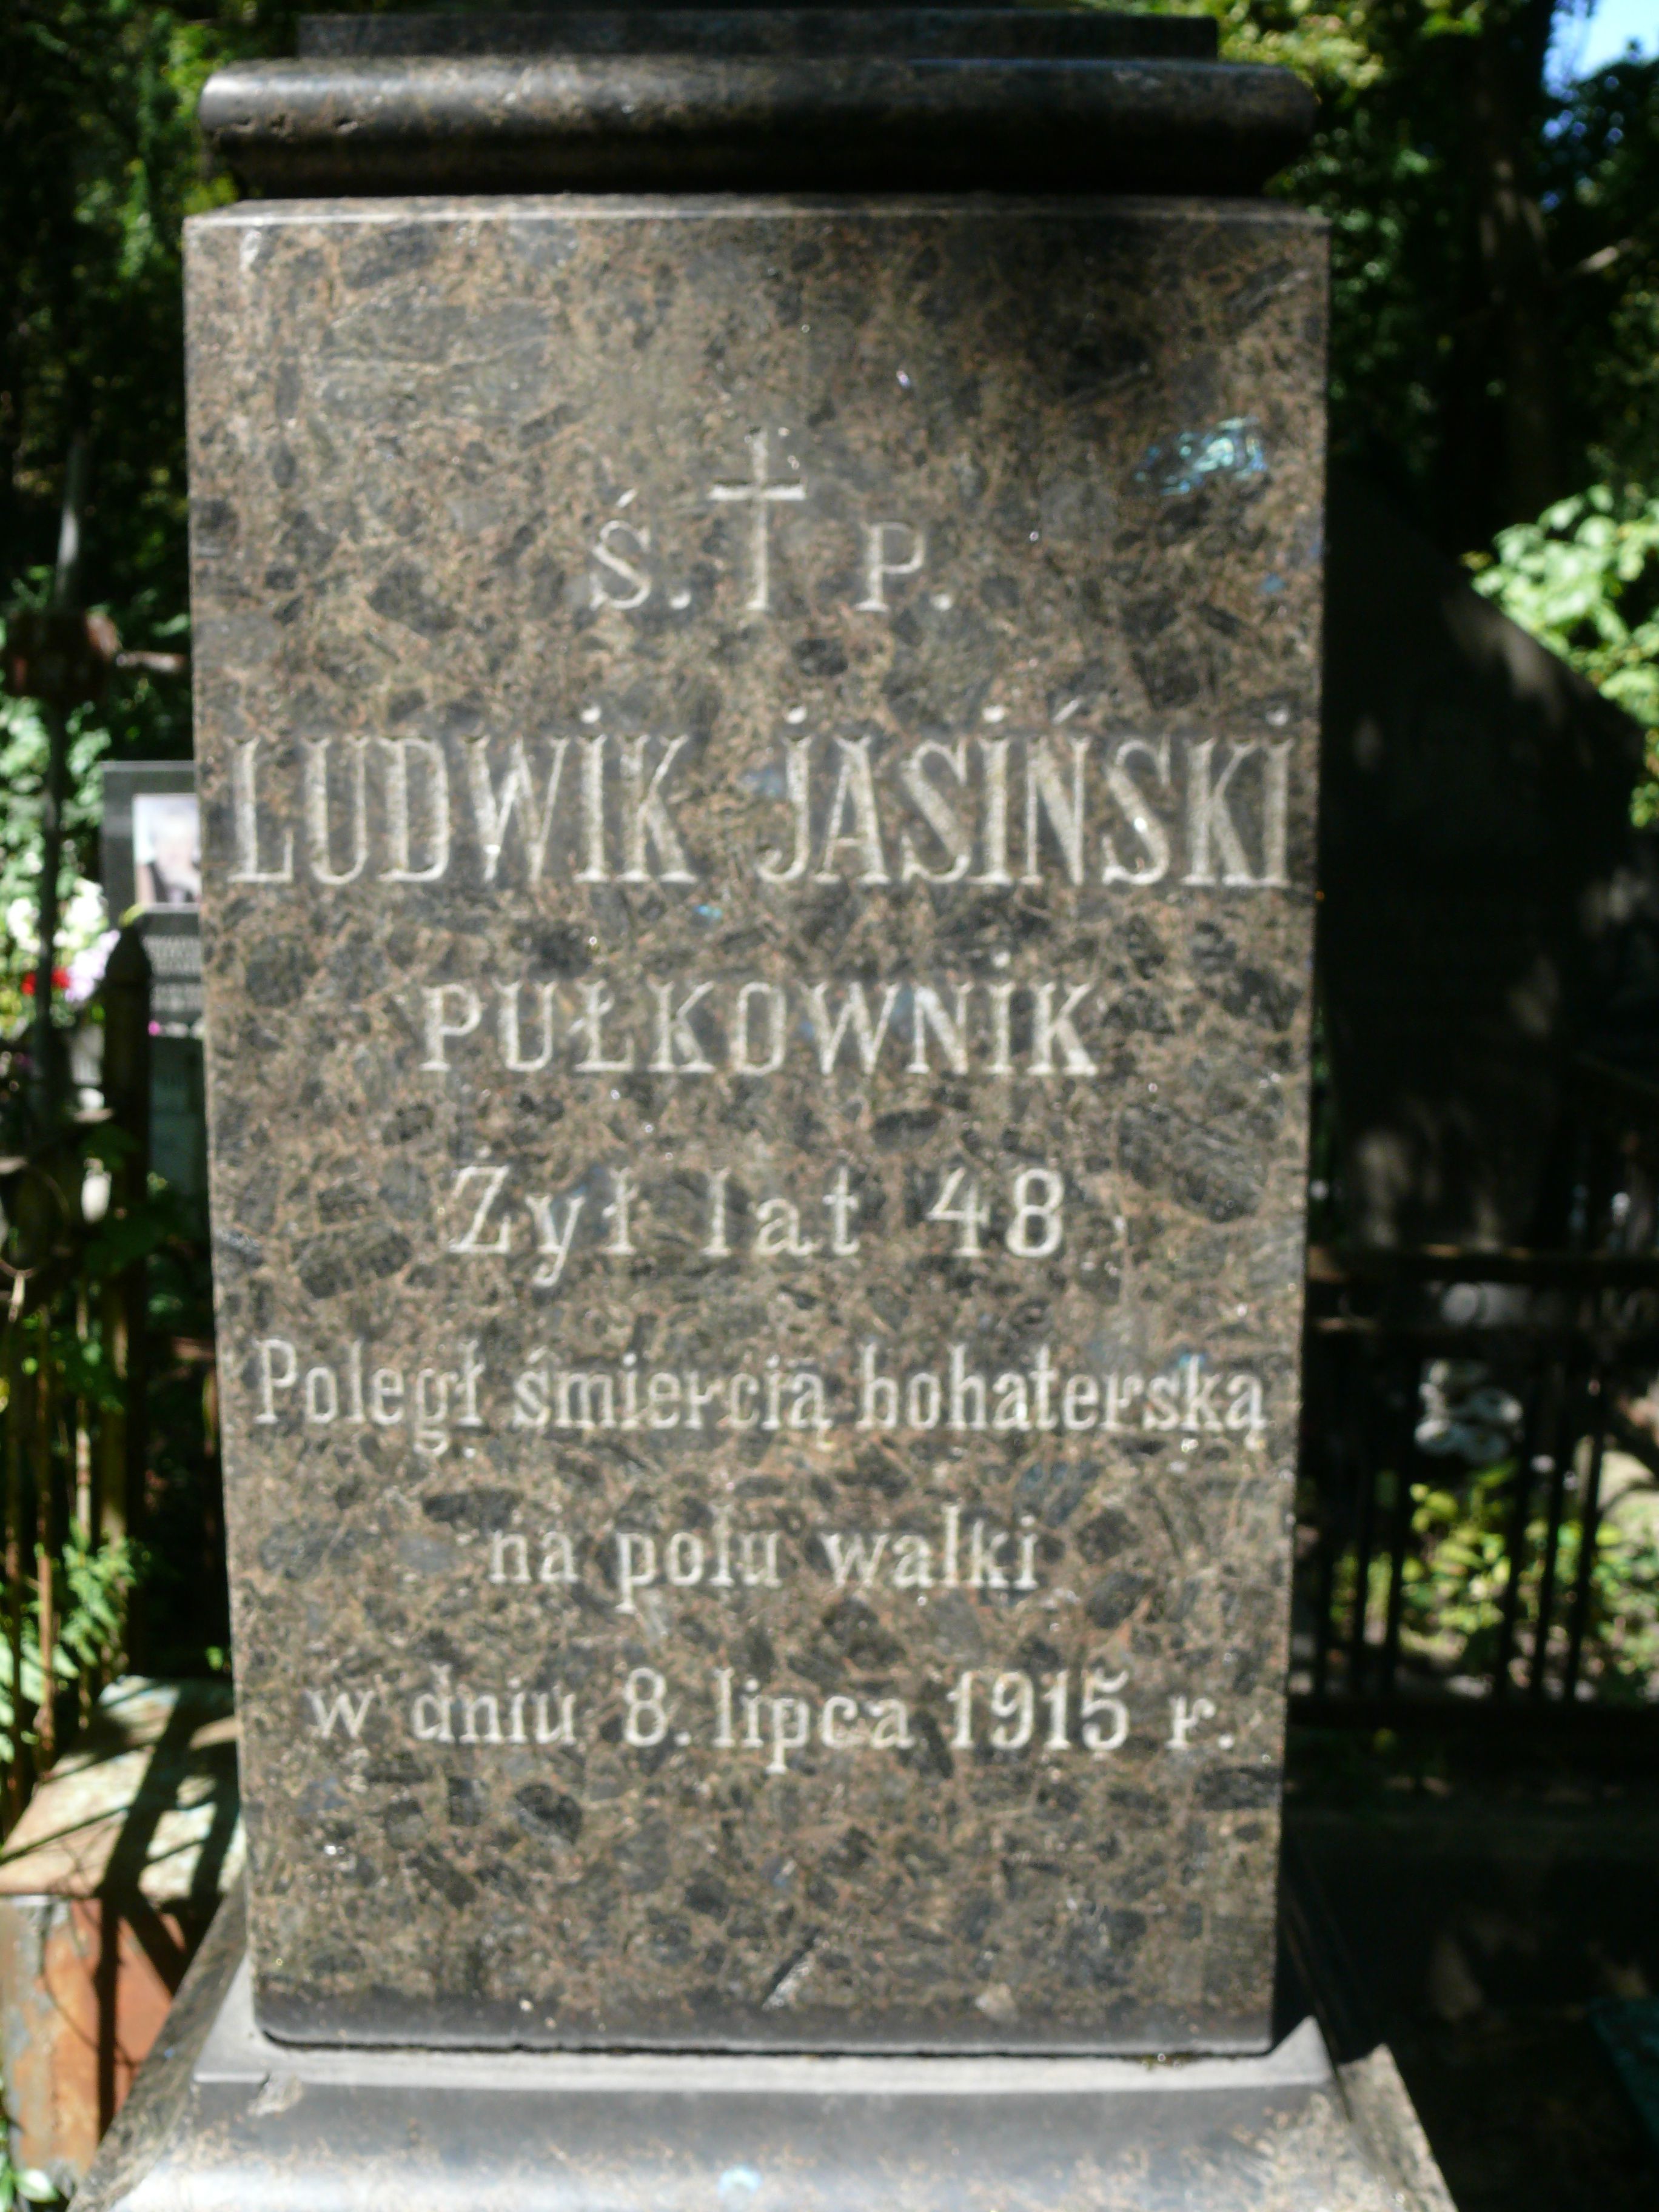 Inscription from the tombstone of Ludwik Jasiński